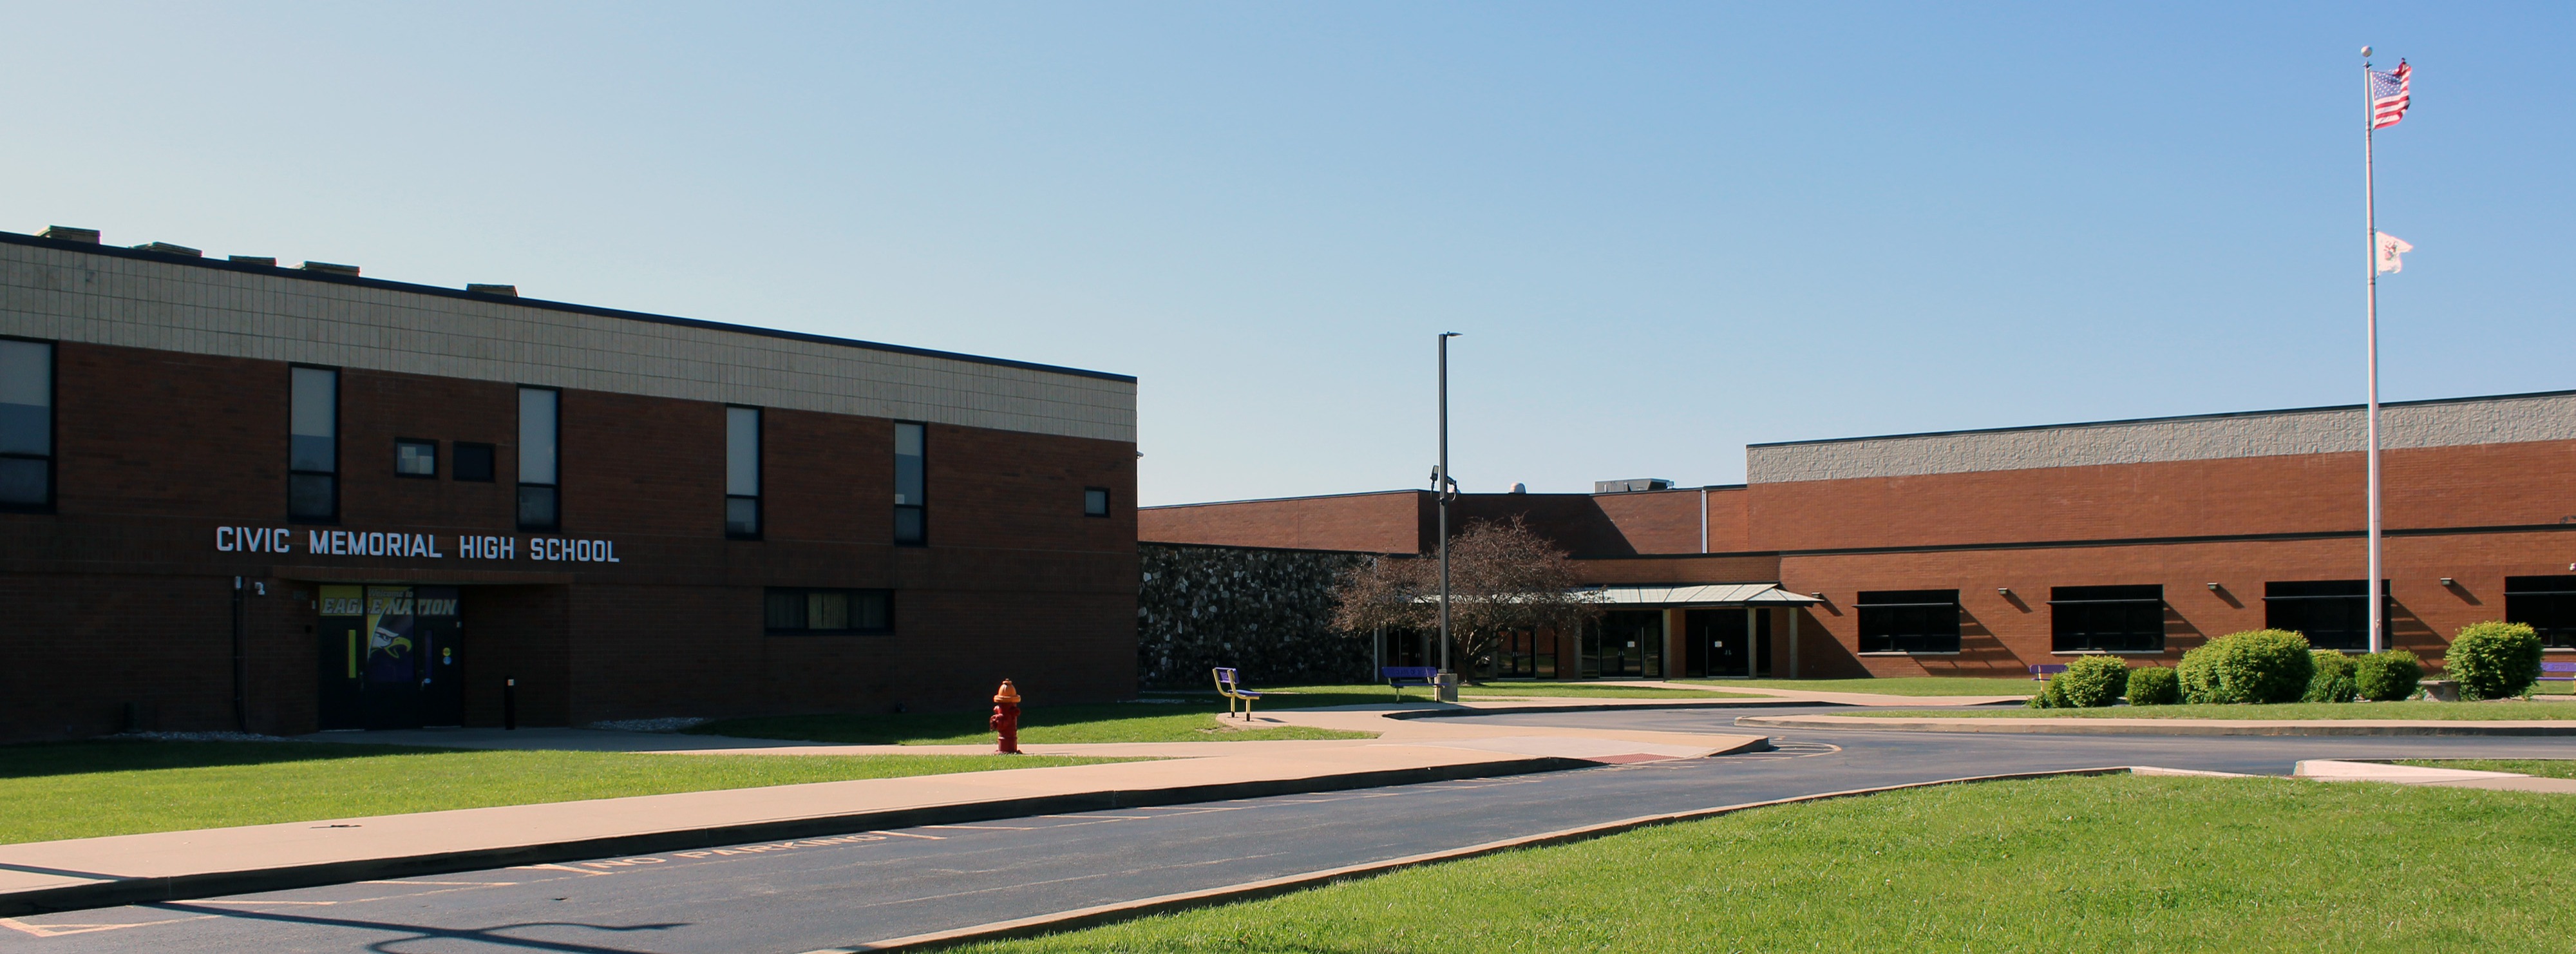 Exterior view of Civic Memorial High School building